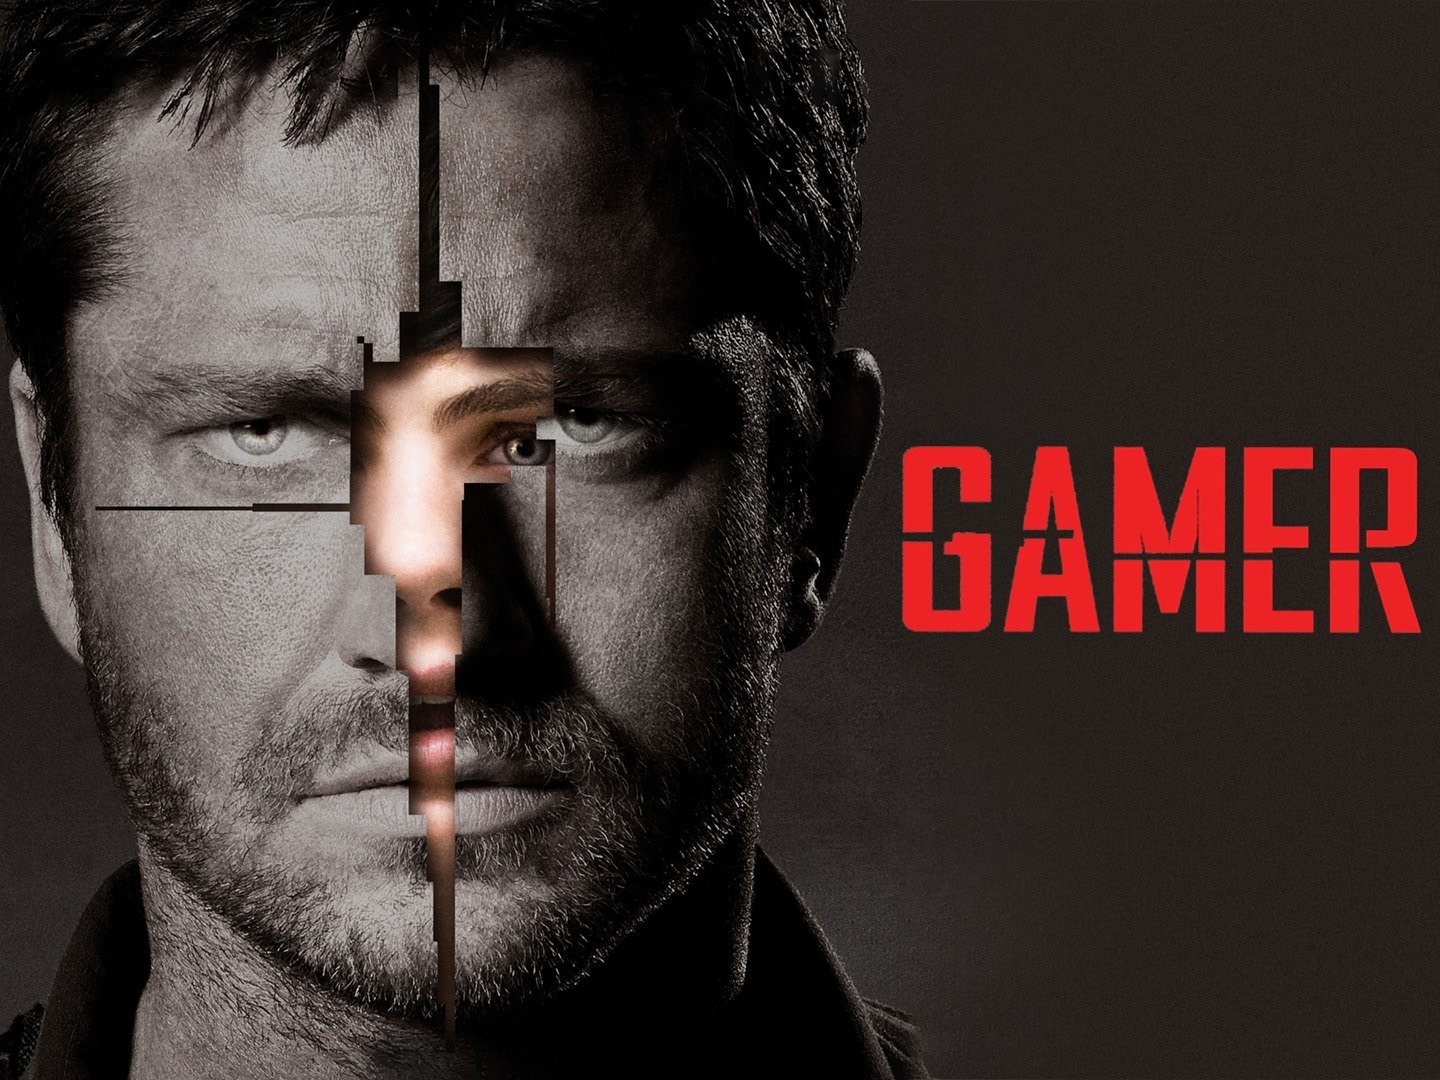 Play the Game (TV Series 2012– ) - IMDb